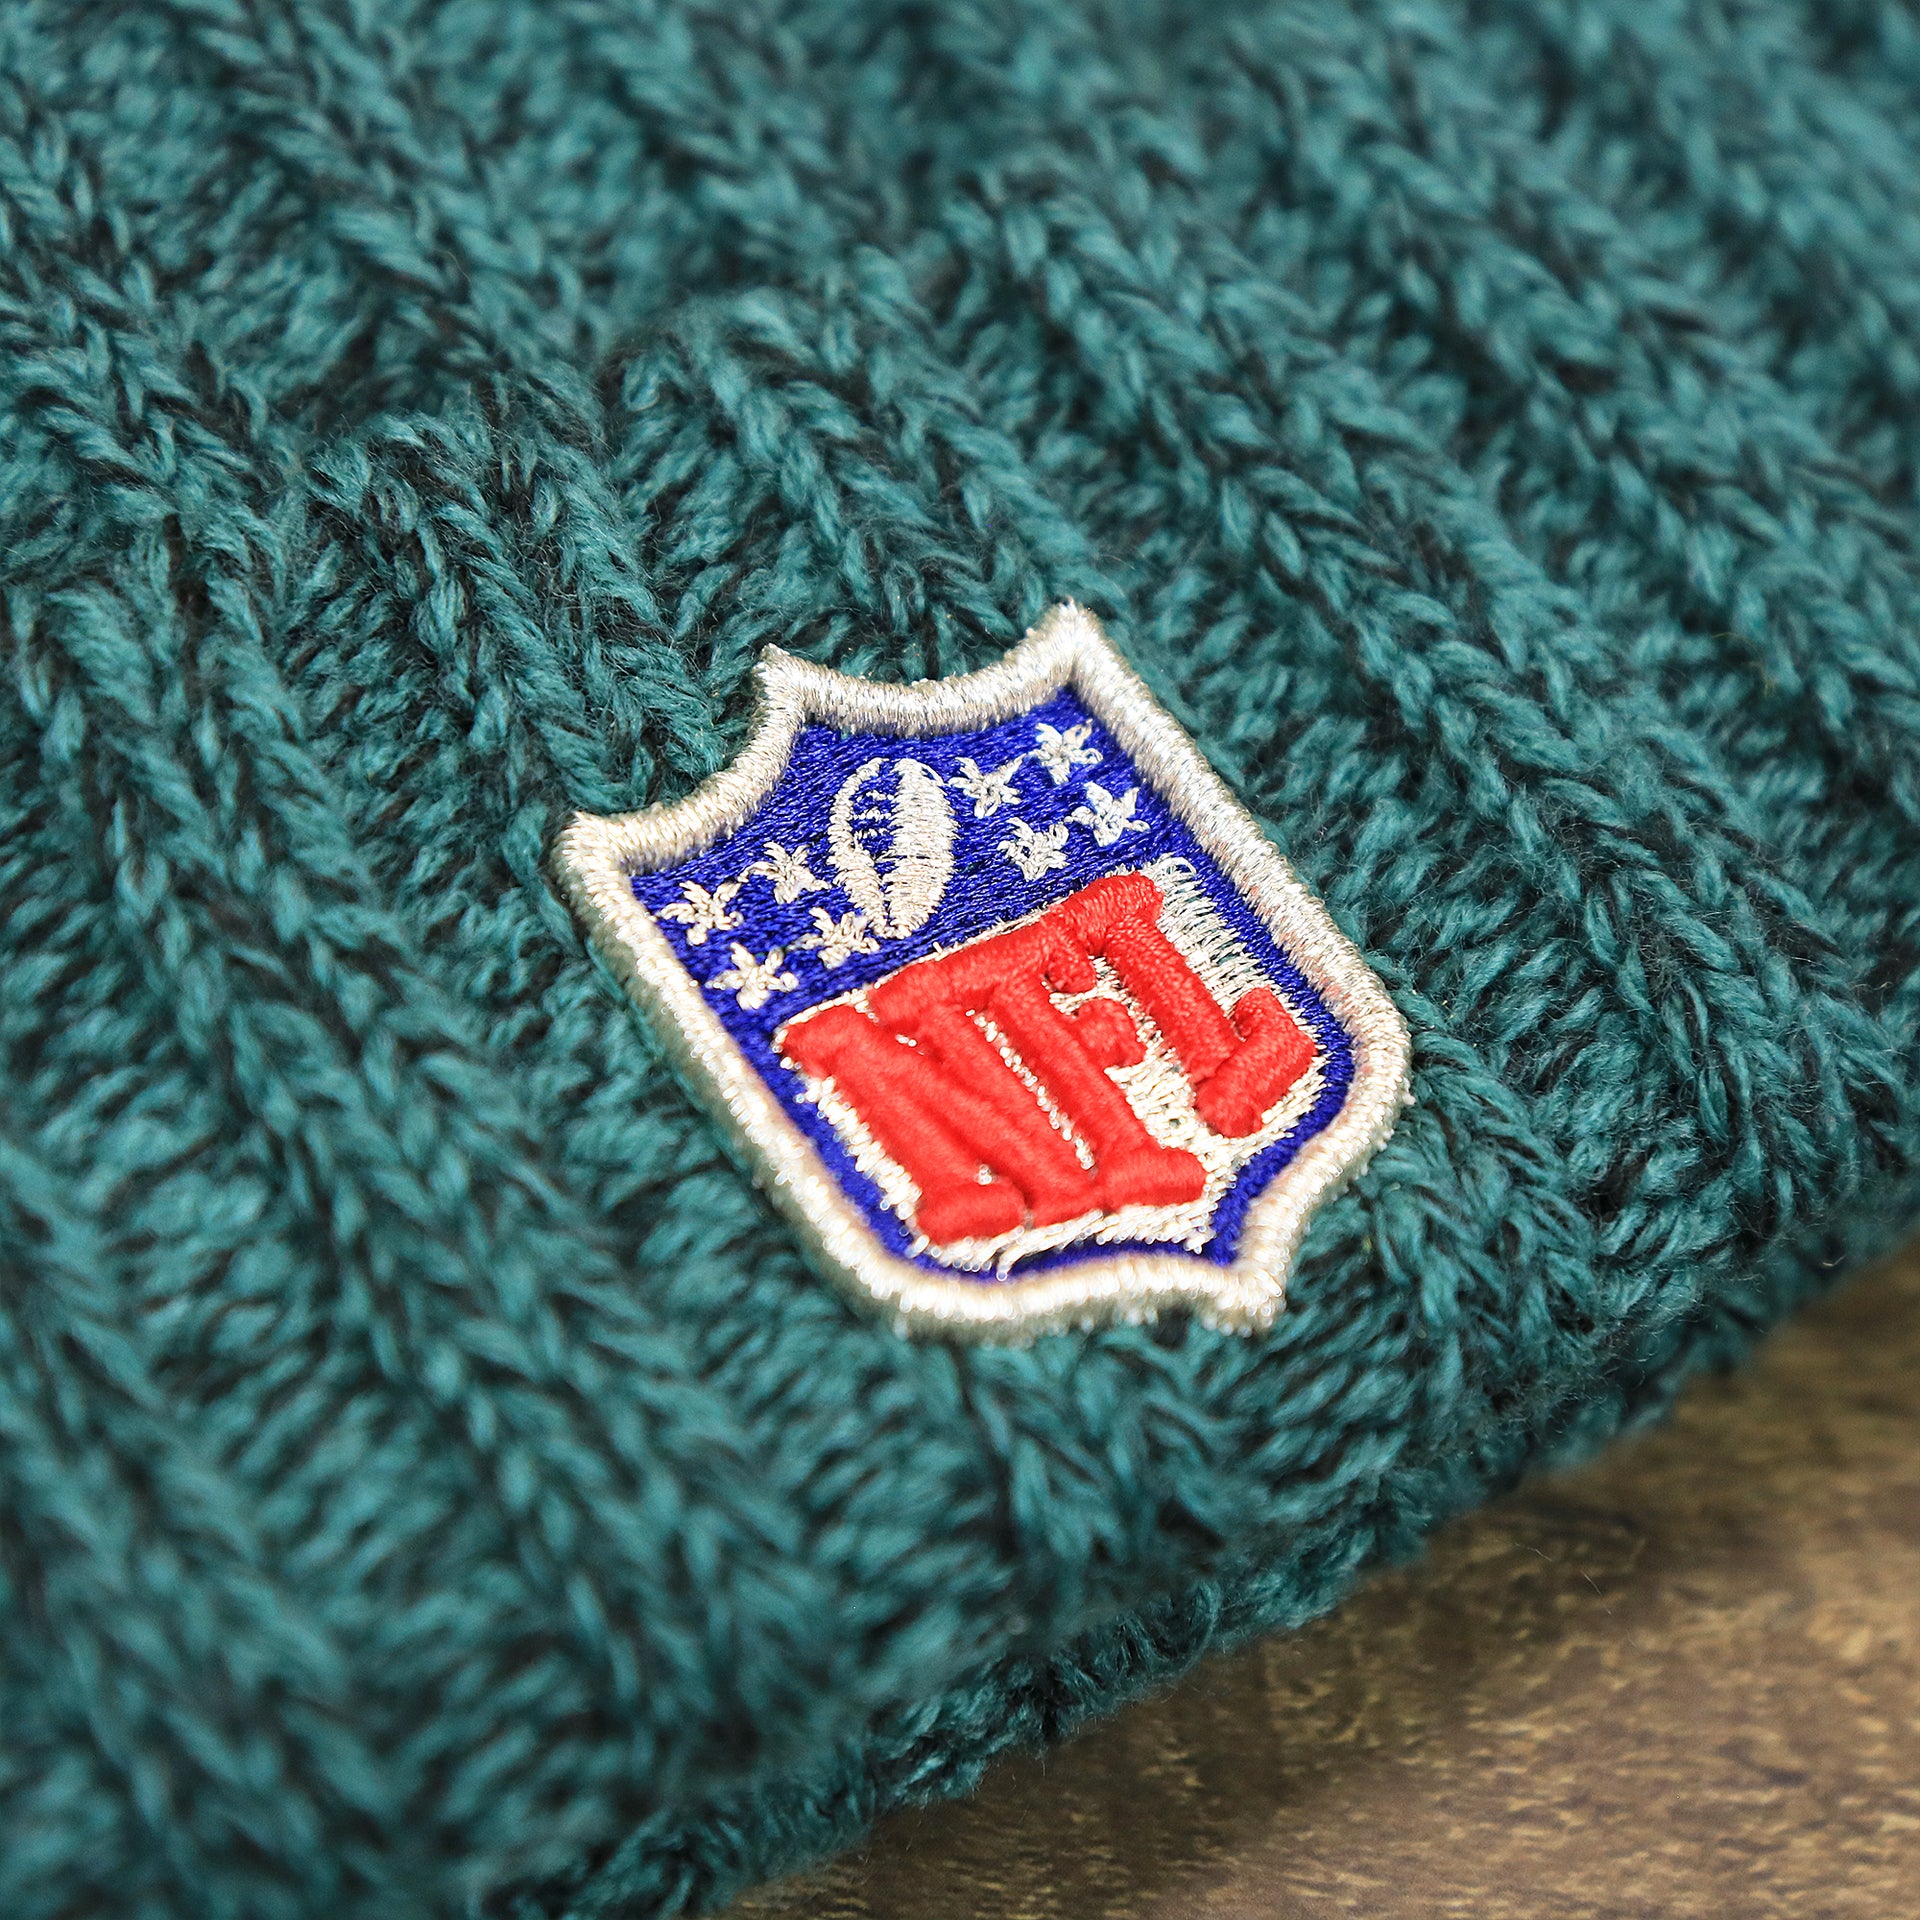 The NFL Logo on the Women’s Philadelphia Eagles Midnight Green On Field Knit Winter Beanie | Green Winter Beanie